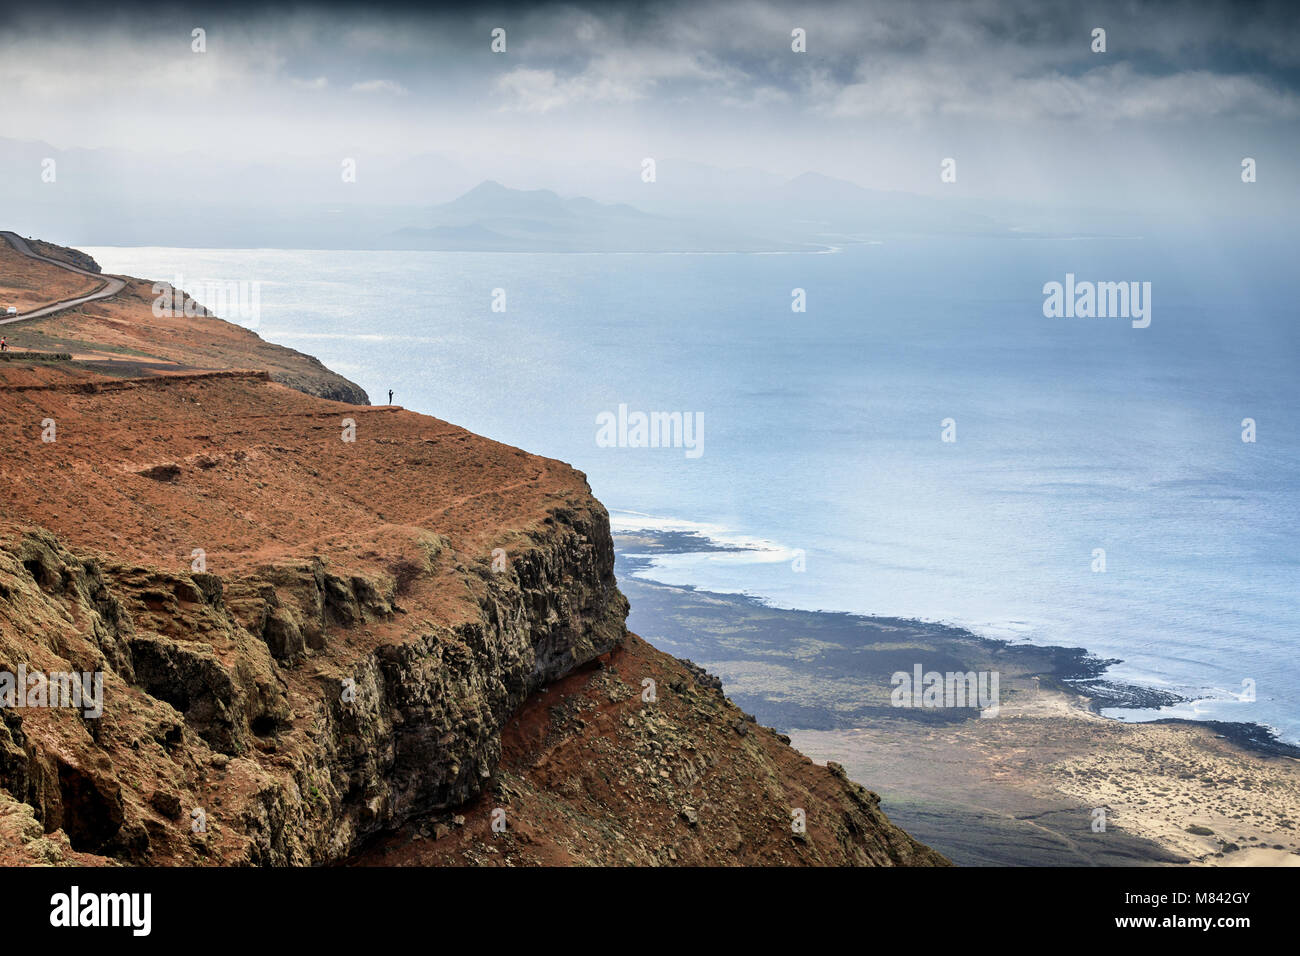 Mirador del Río est un point de vue situé sur un escarpement d'environ 475 mètres de haut appelé Batería del Río, Lanzarote, îles Canaries, Espagne Banque D'Images